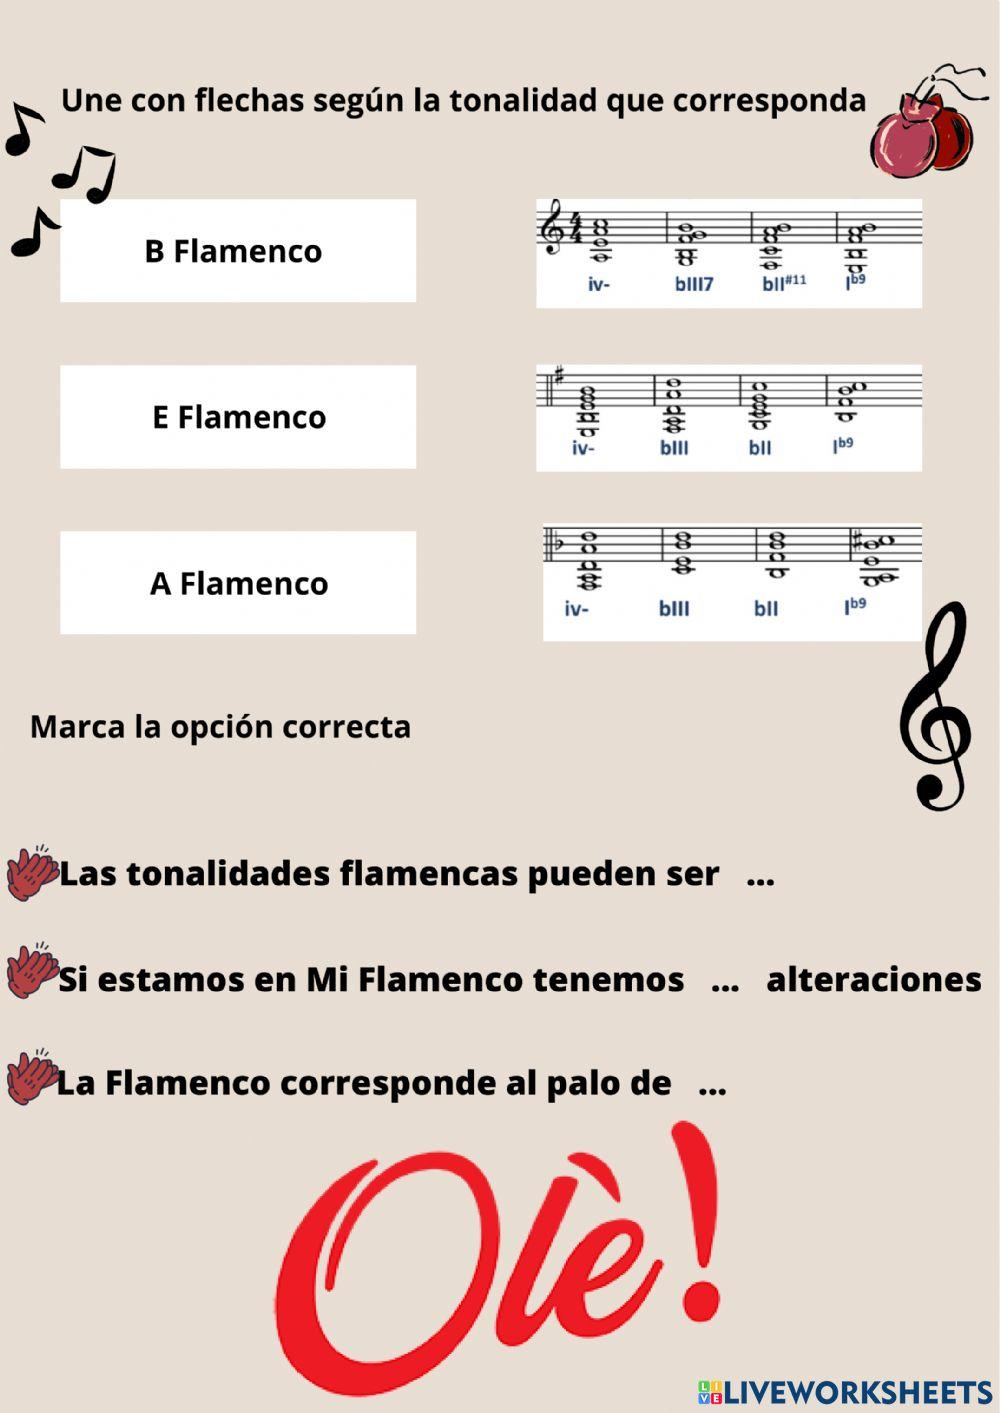 Las tonalidades flamencas